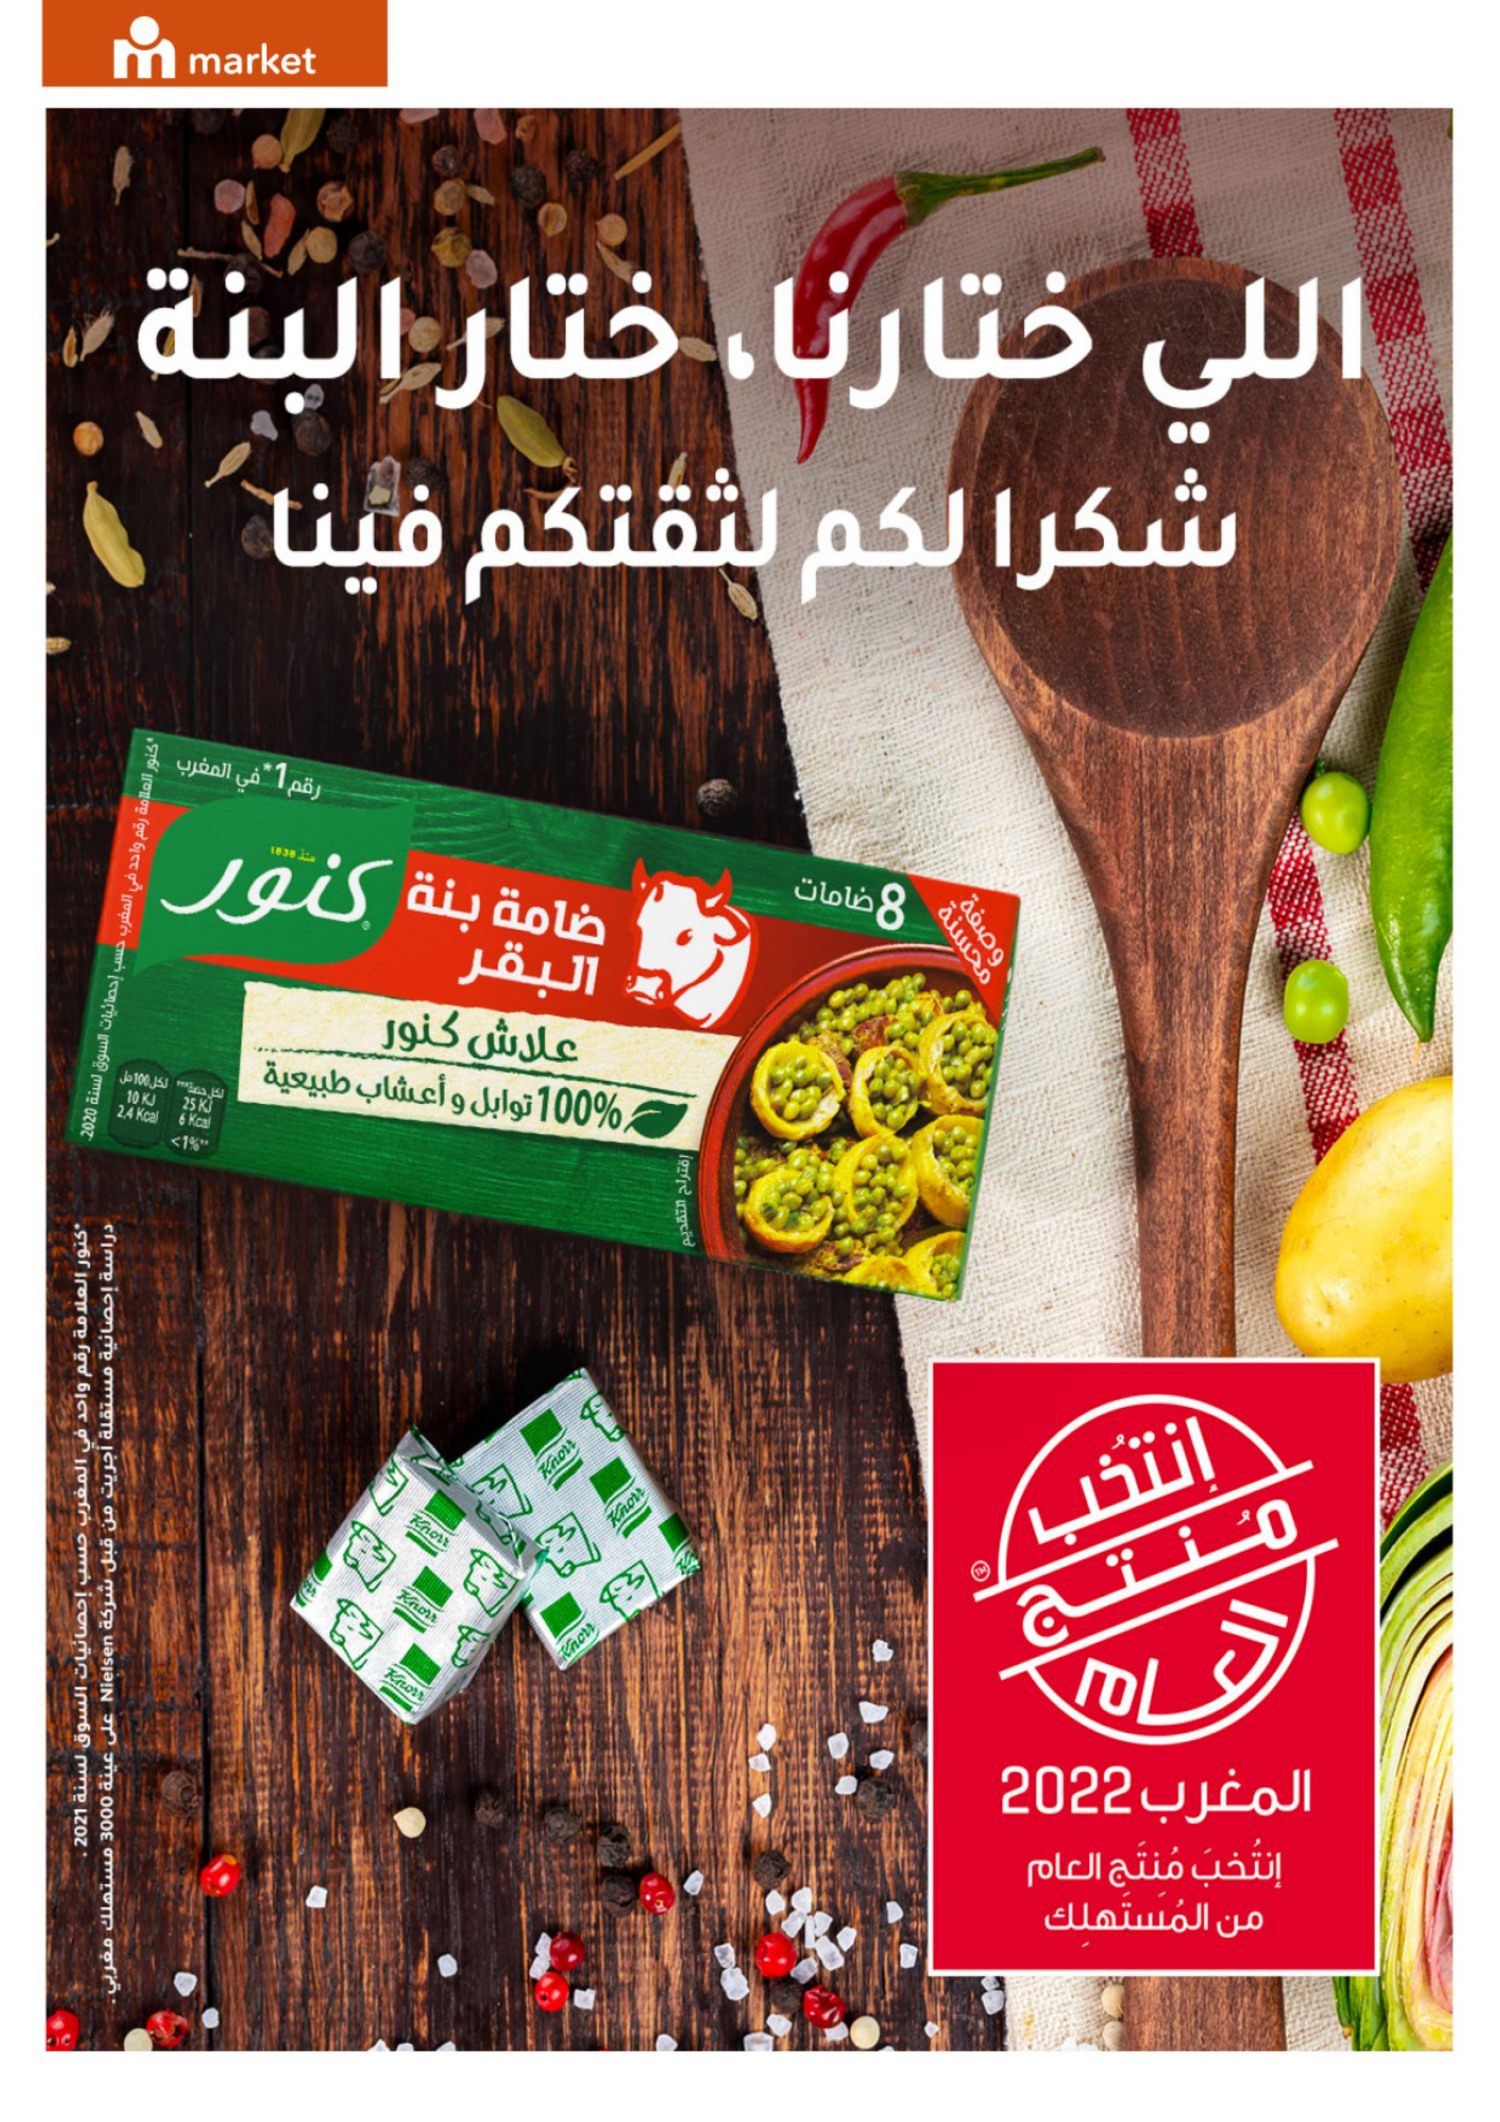 marjane market Ramadan 2023 catalogue